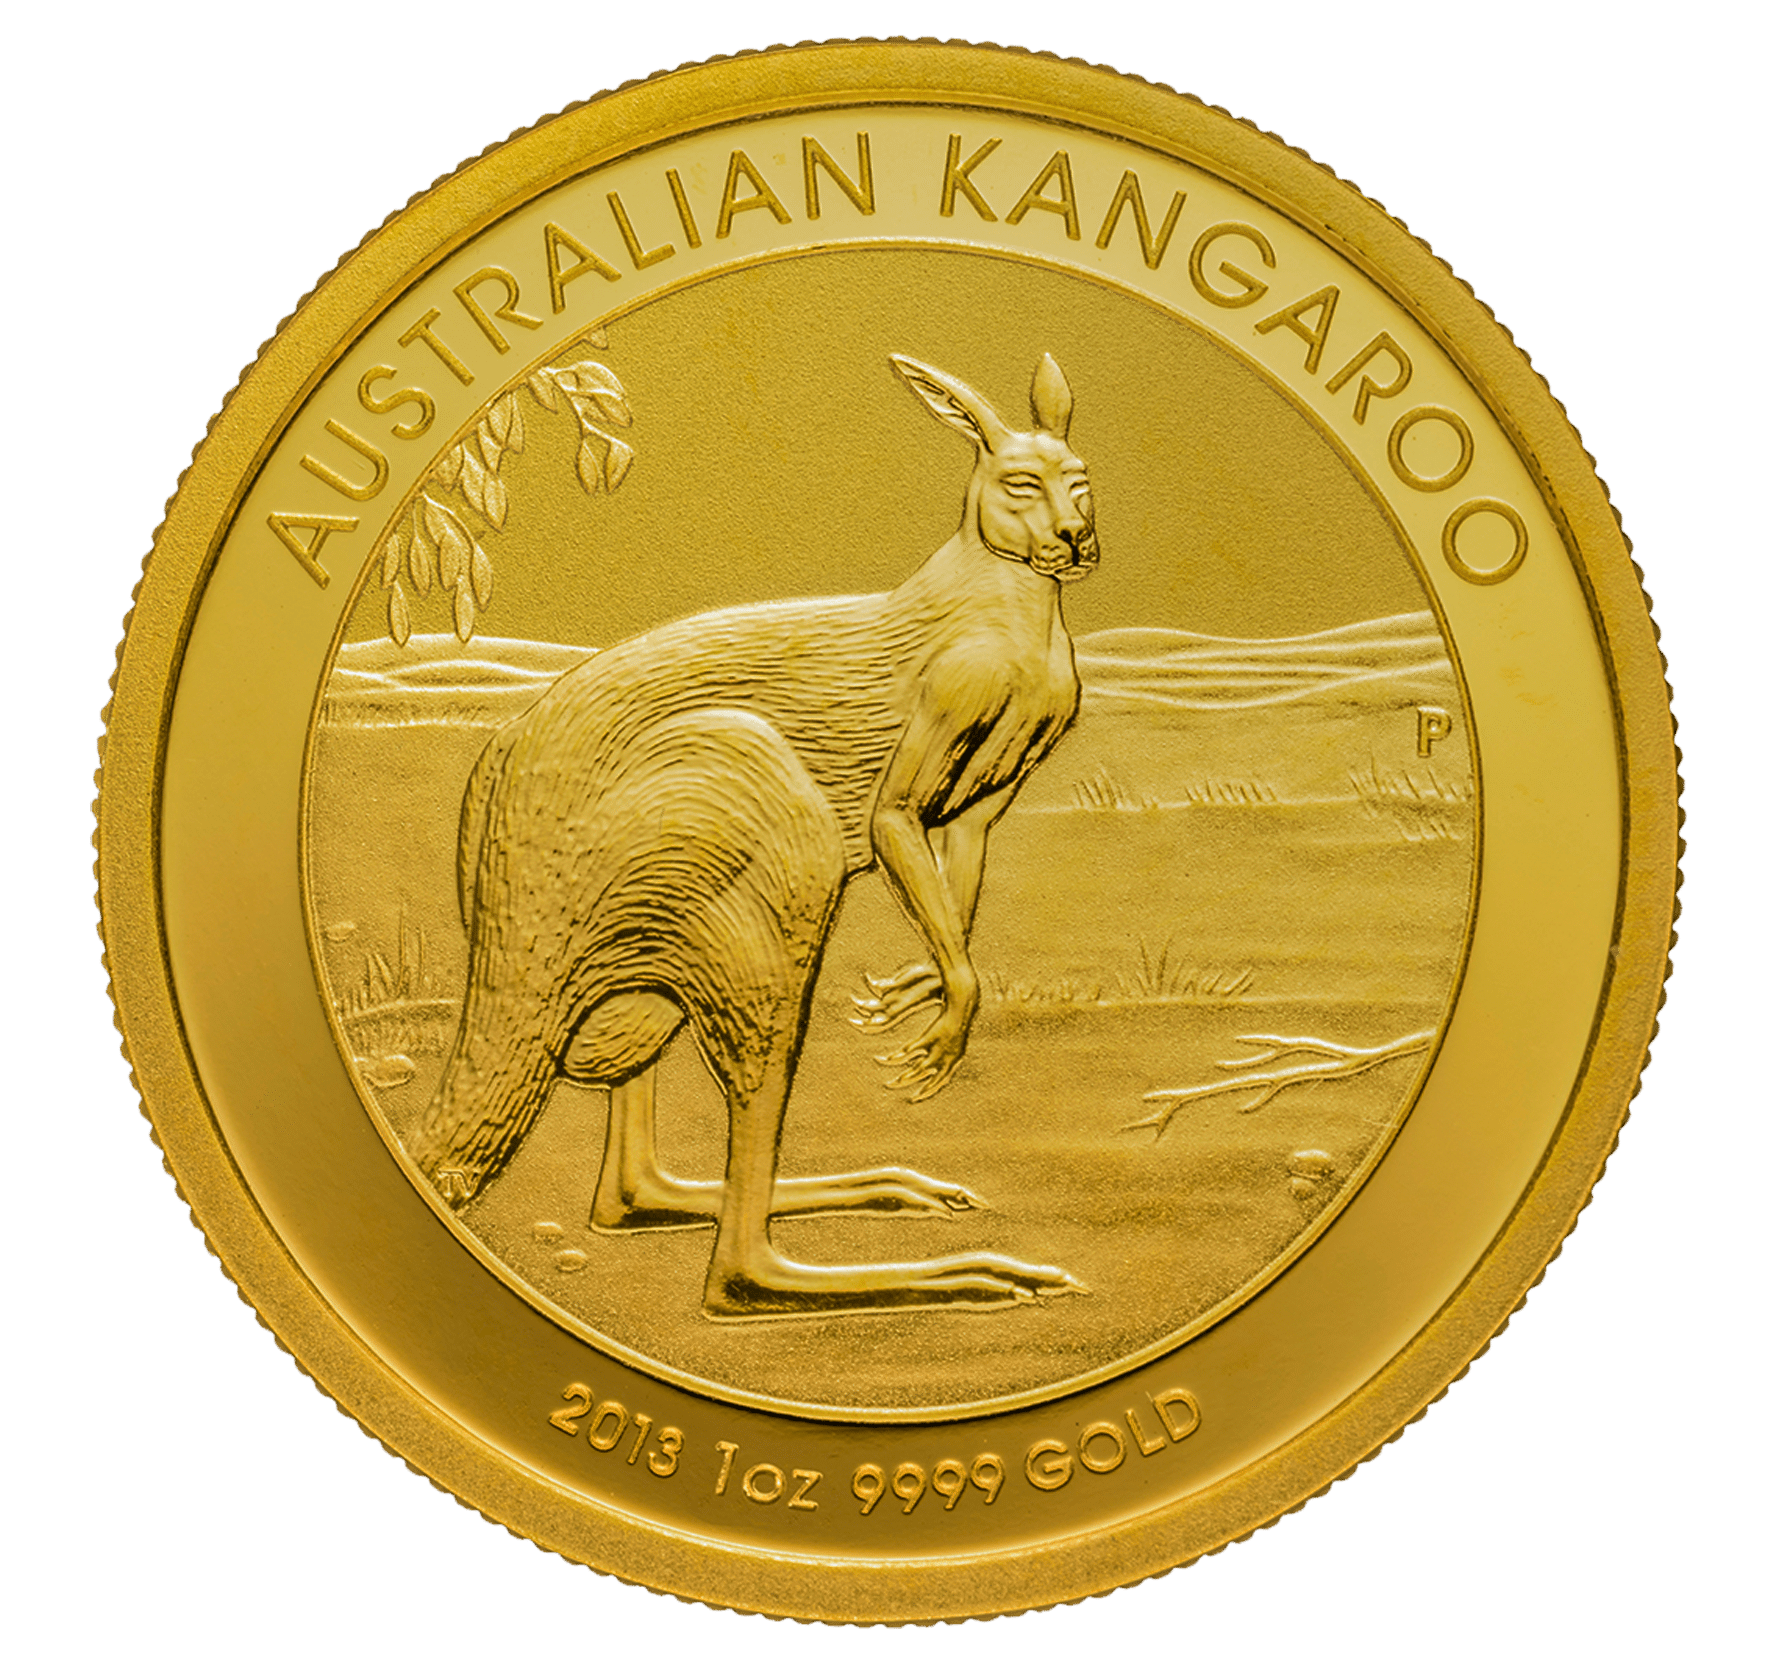 1-ounce Gold Kangaroo coin showcased on a plush surface.